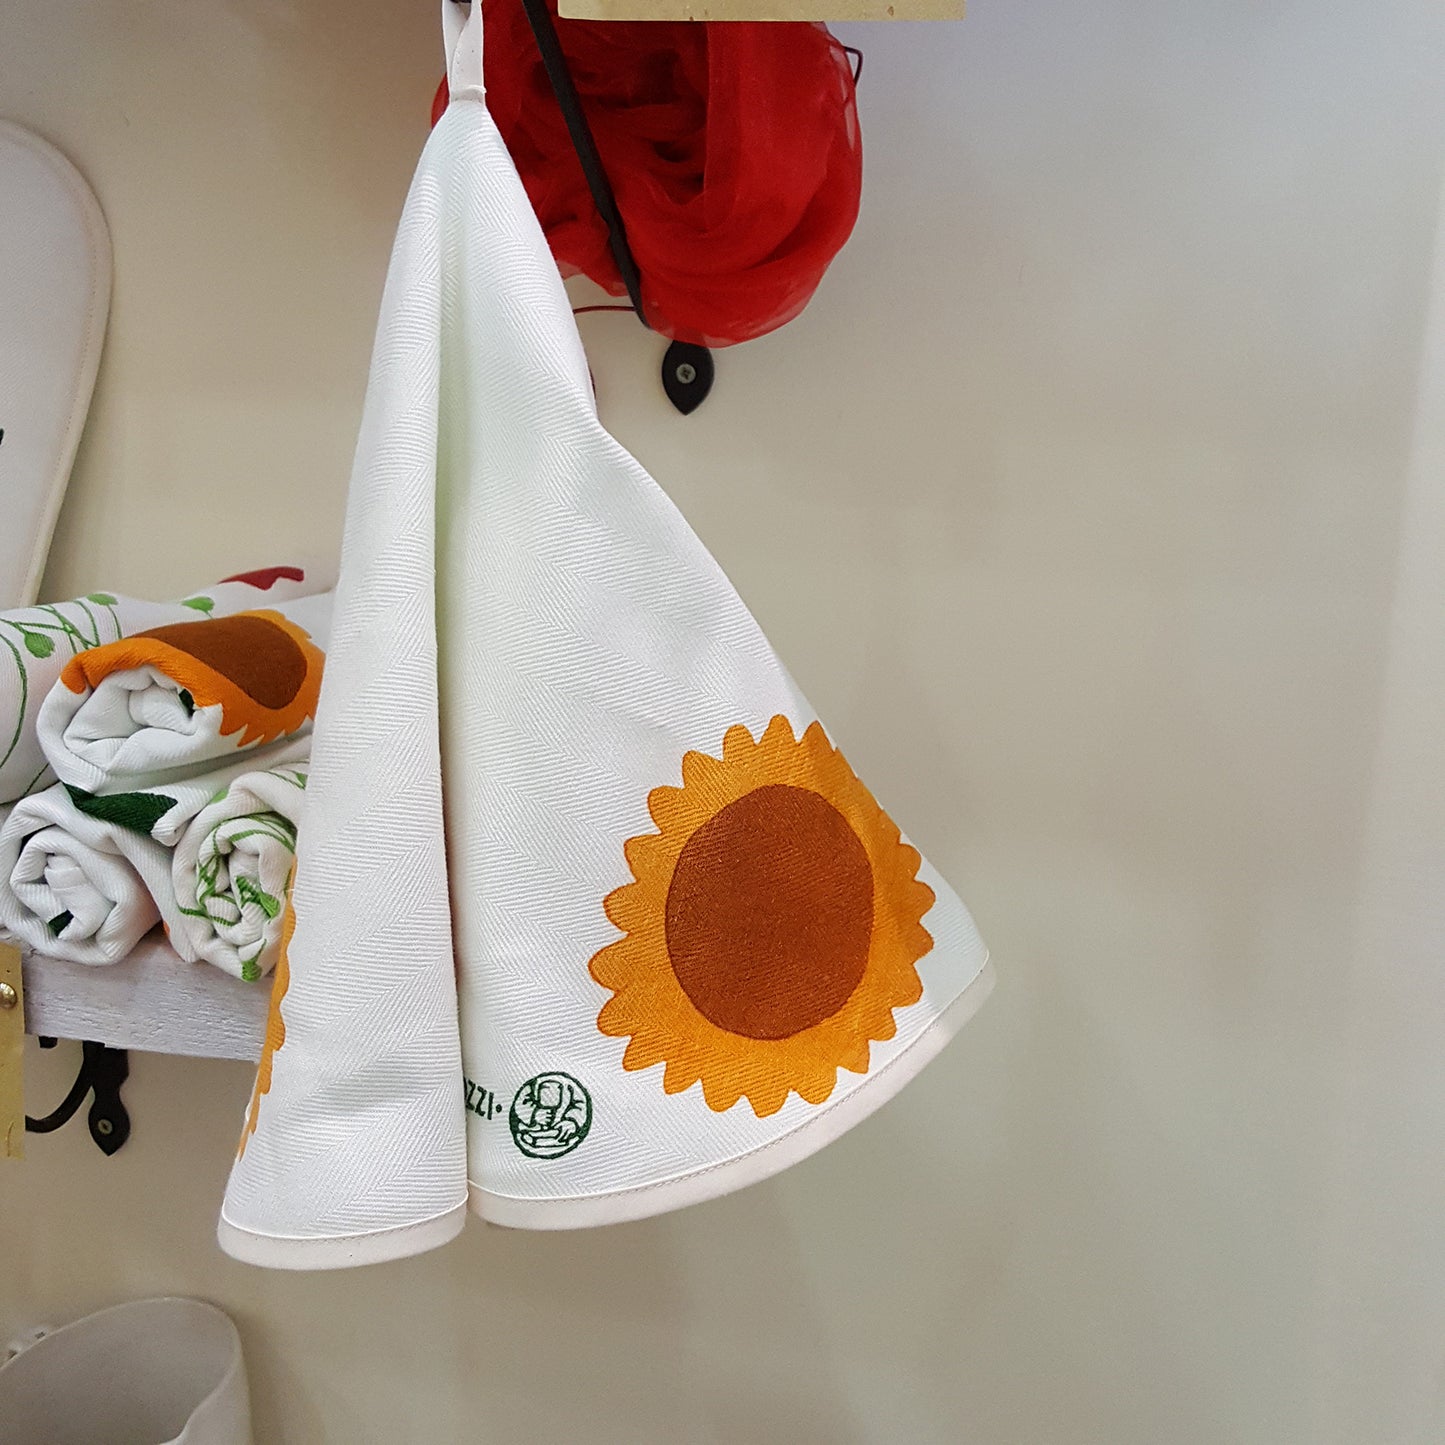 Round tea towel with sunflower print